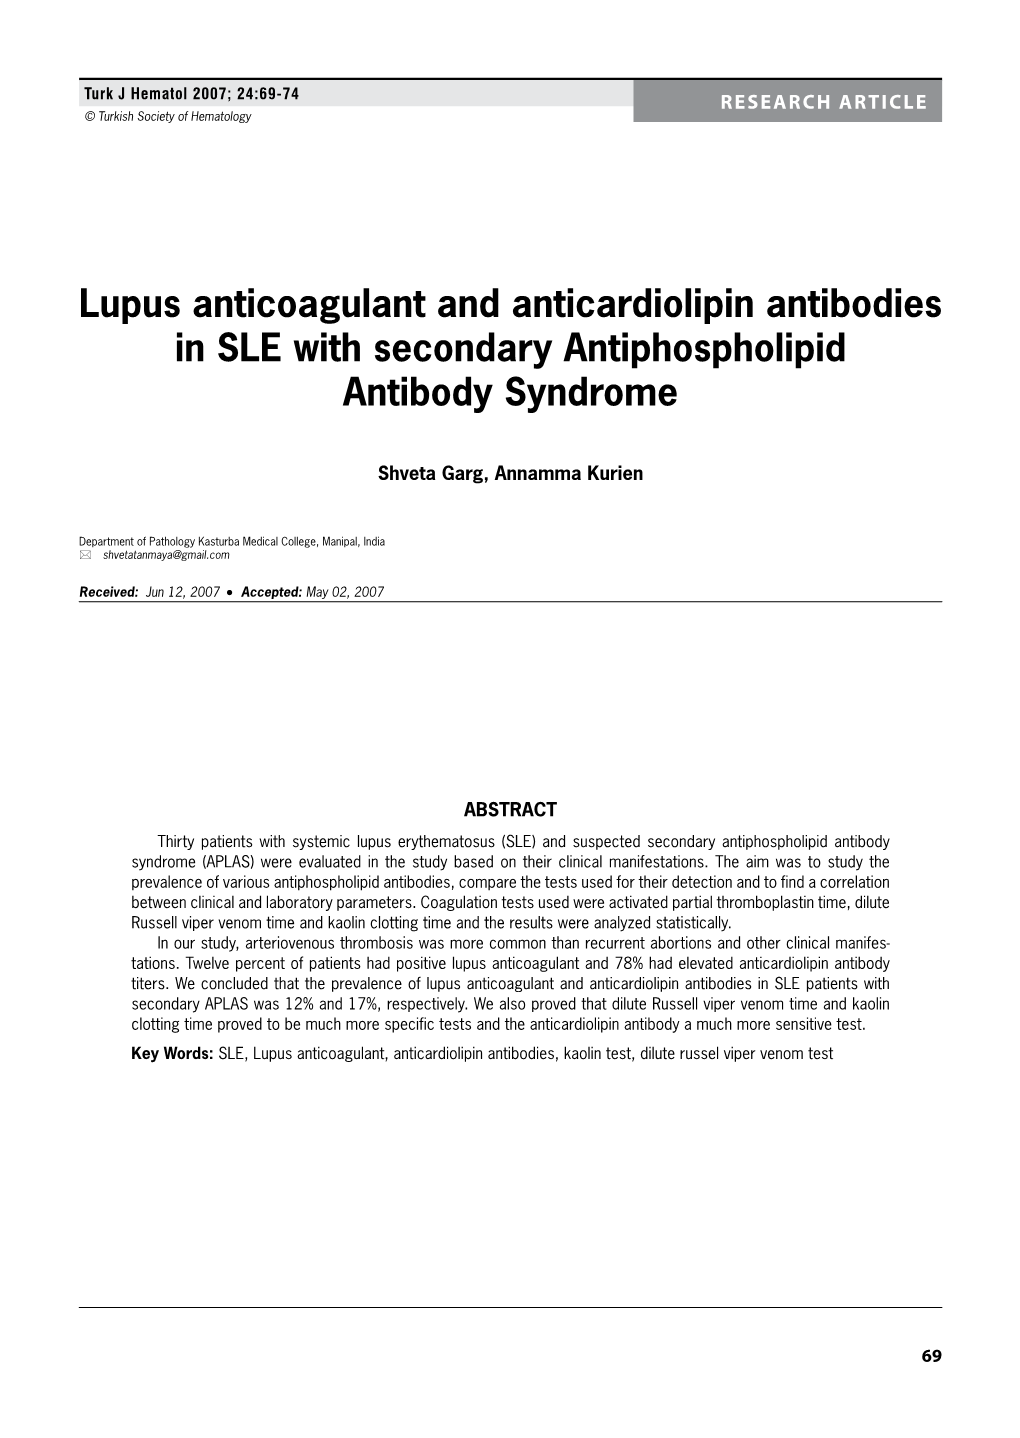 Lupus Anticoagulant and Anticardiolipin Antibodies in SLE with Secondary Antiphospholipid Antibody Syndrome